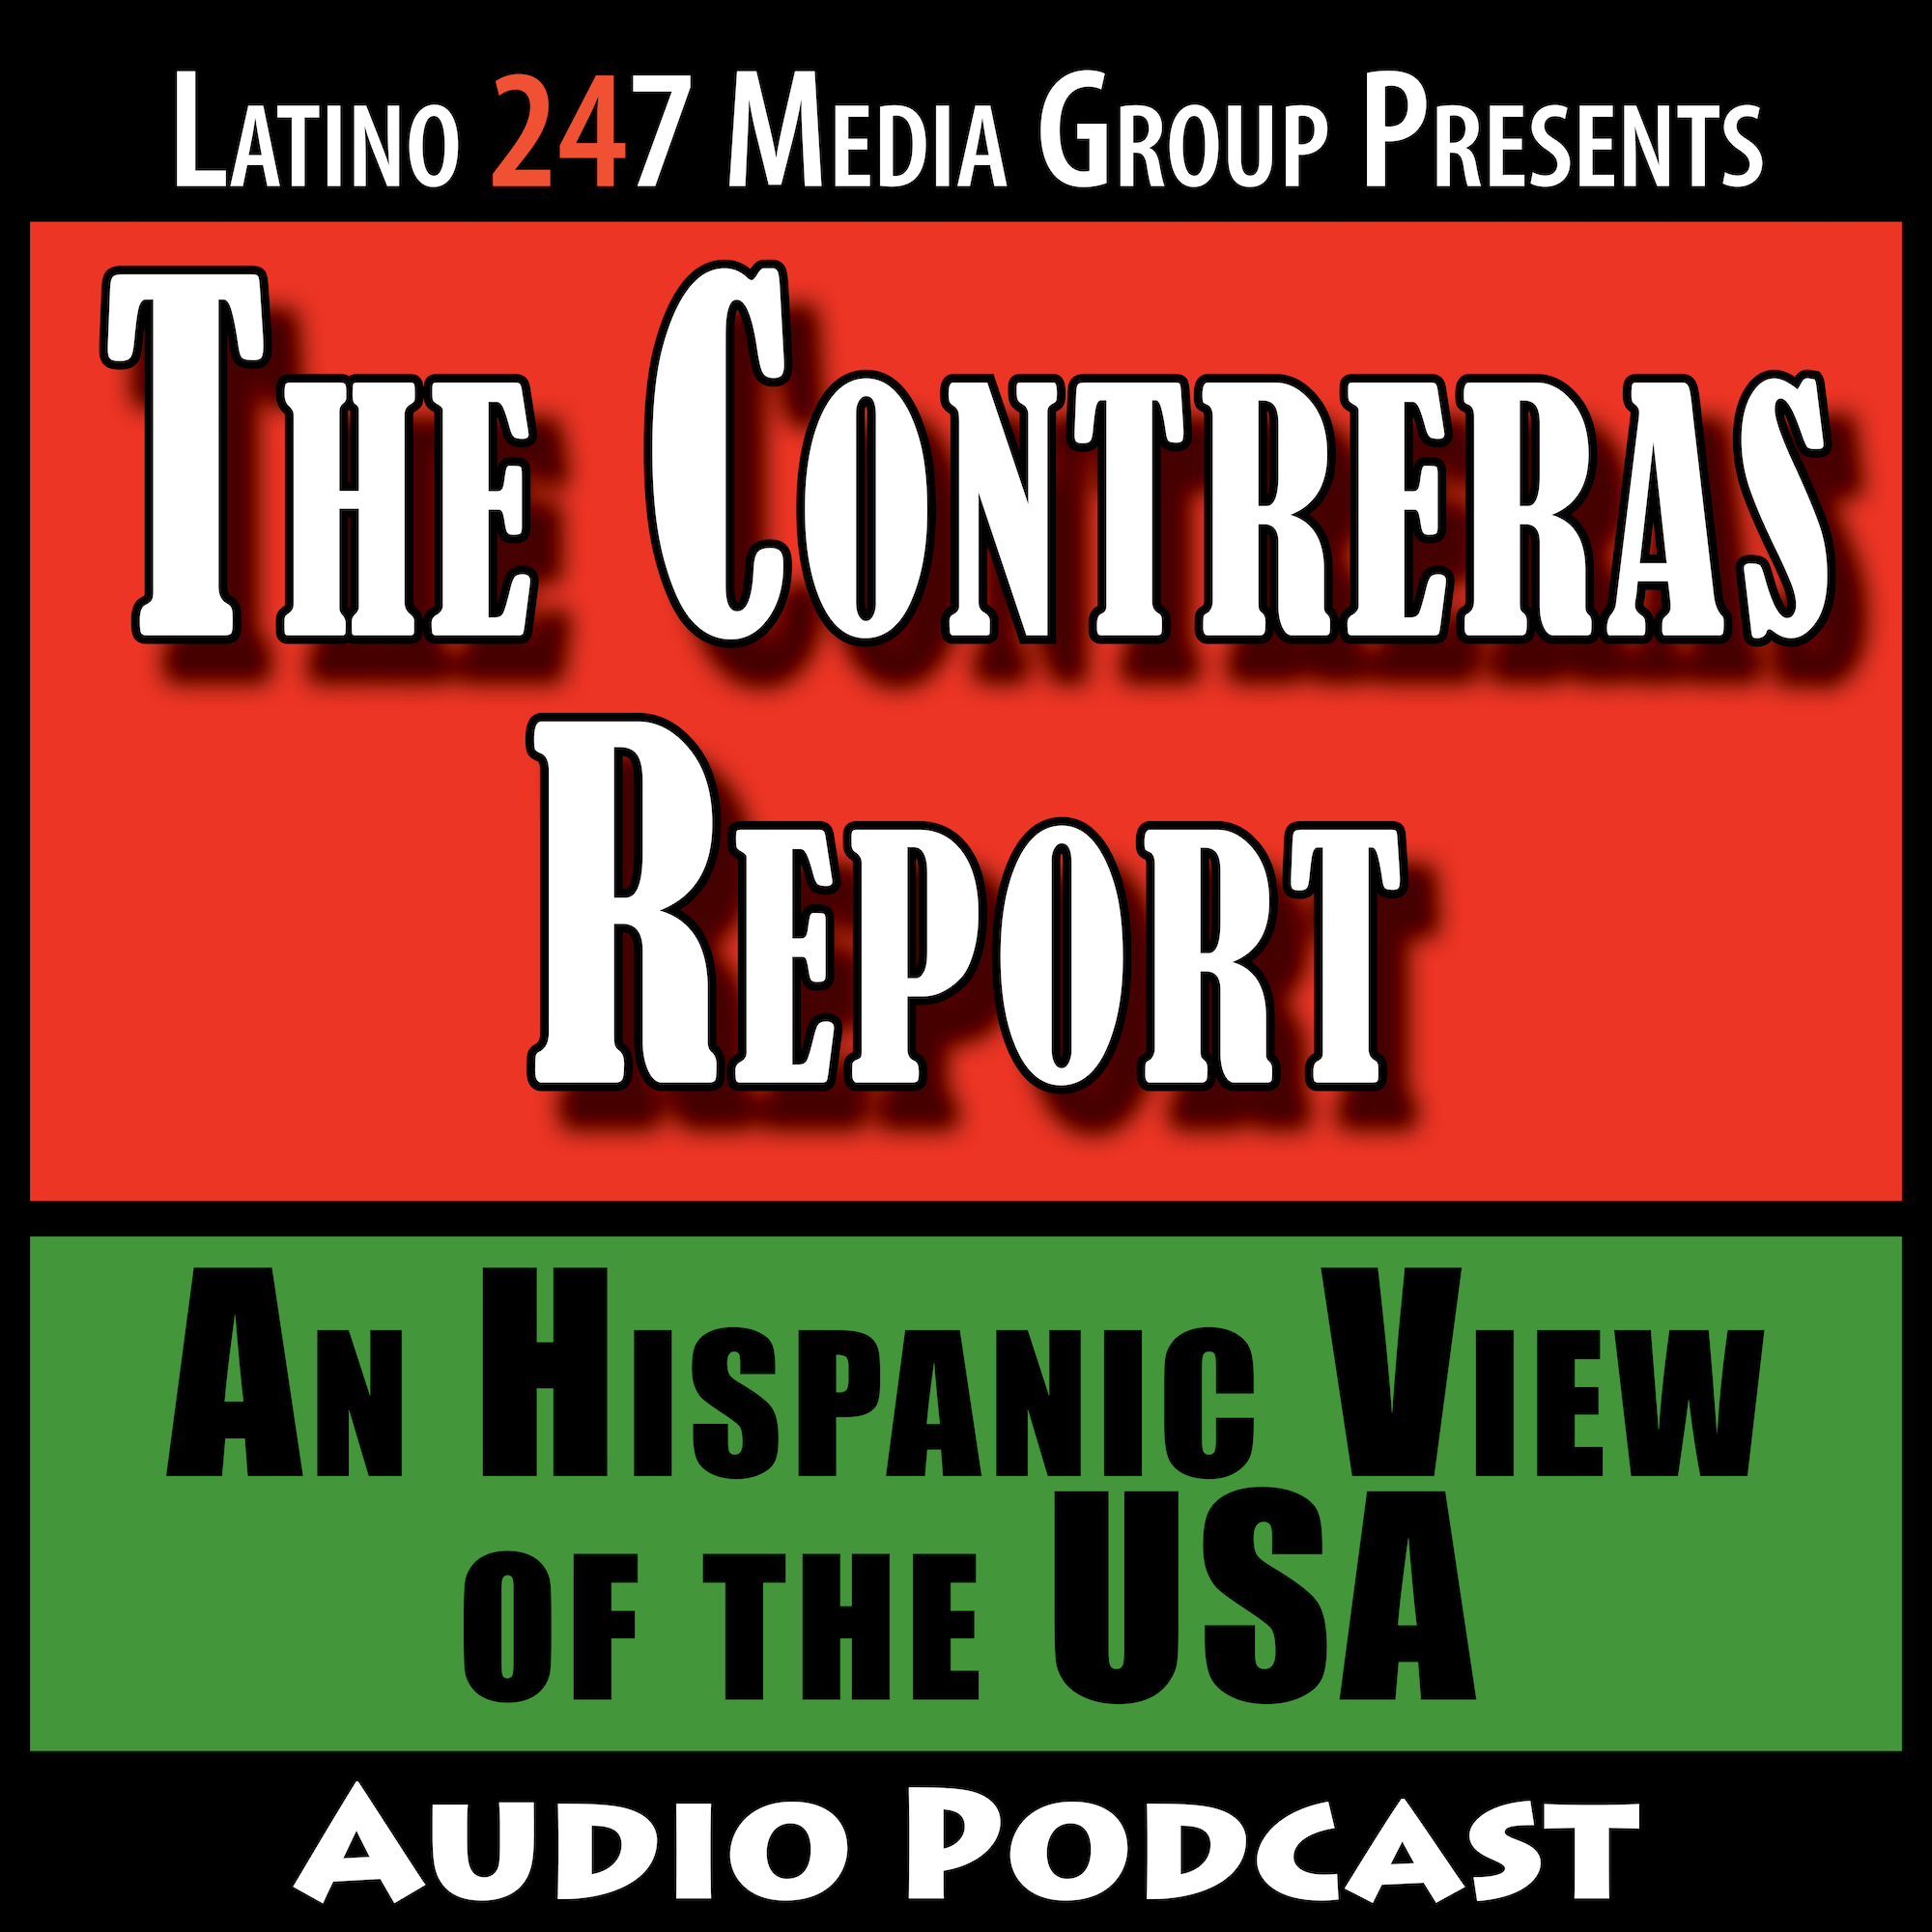 The Contreras Report: A Hispanic View of the USA